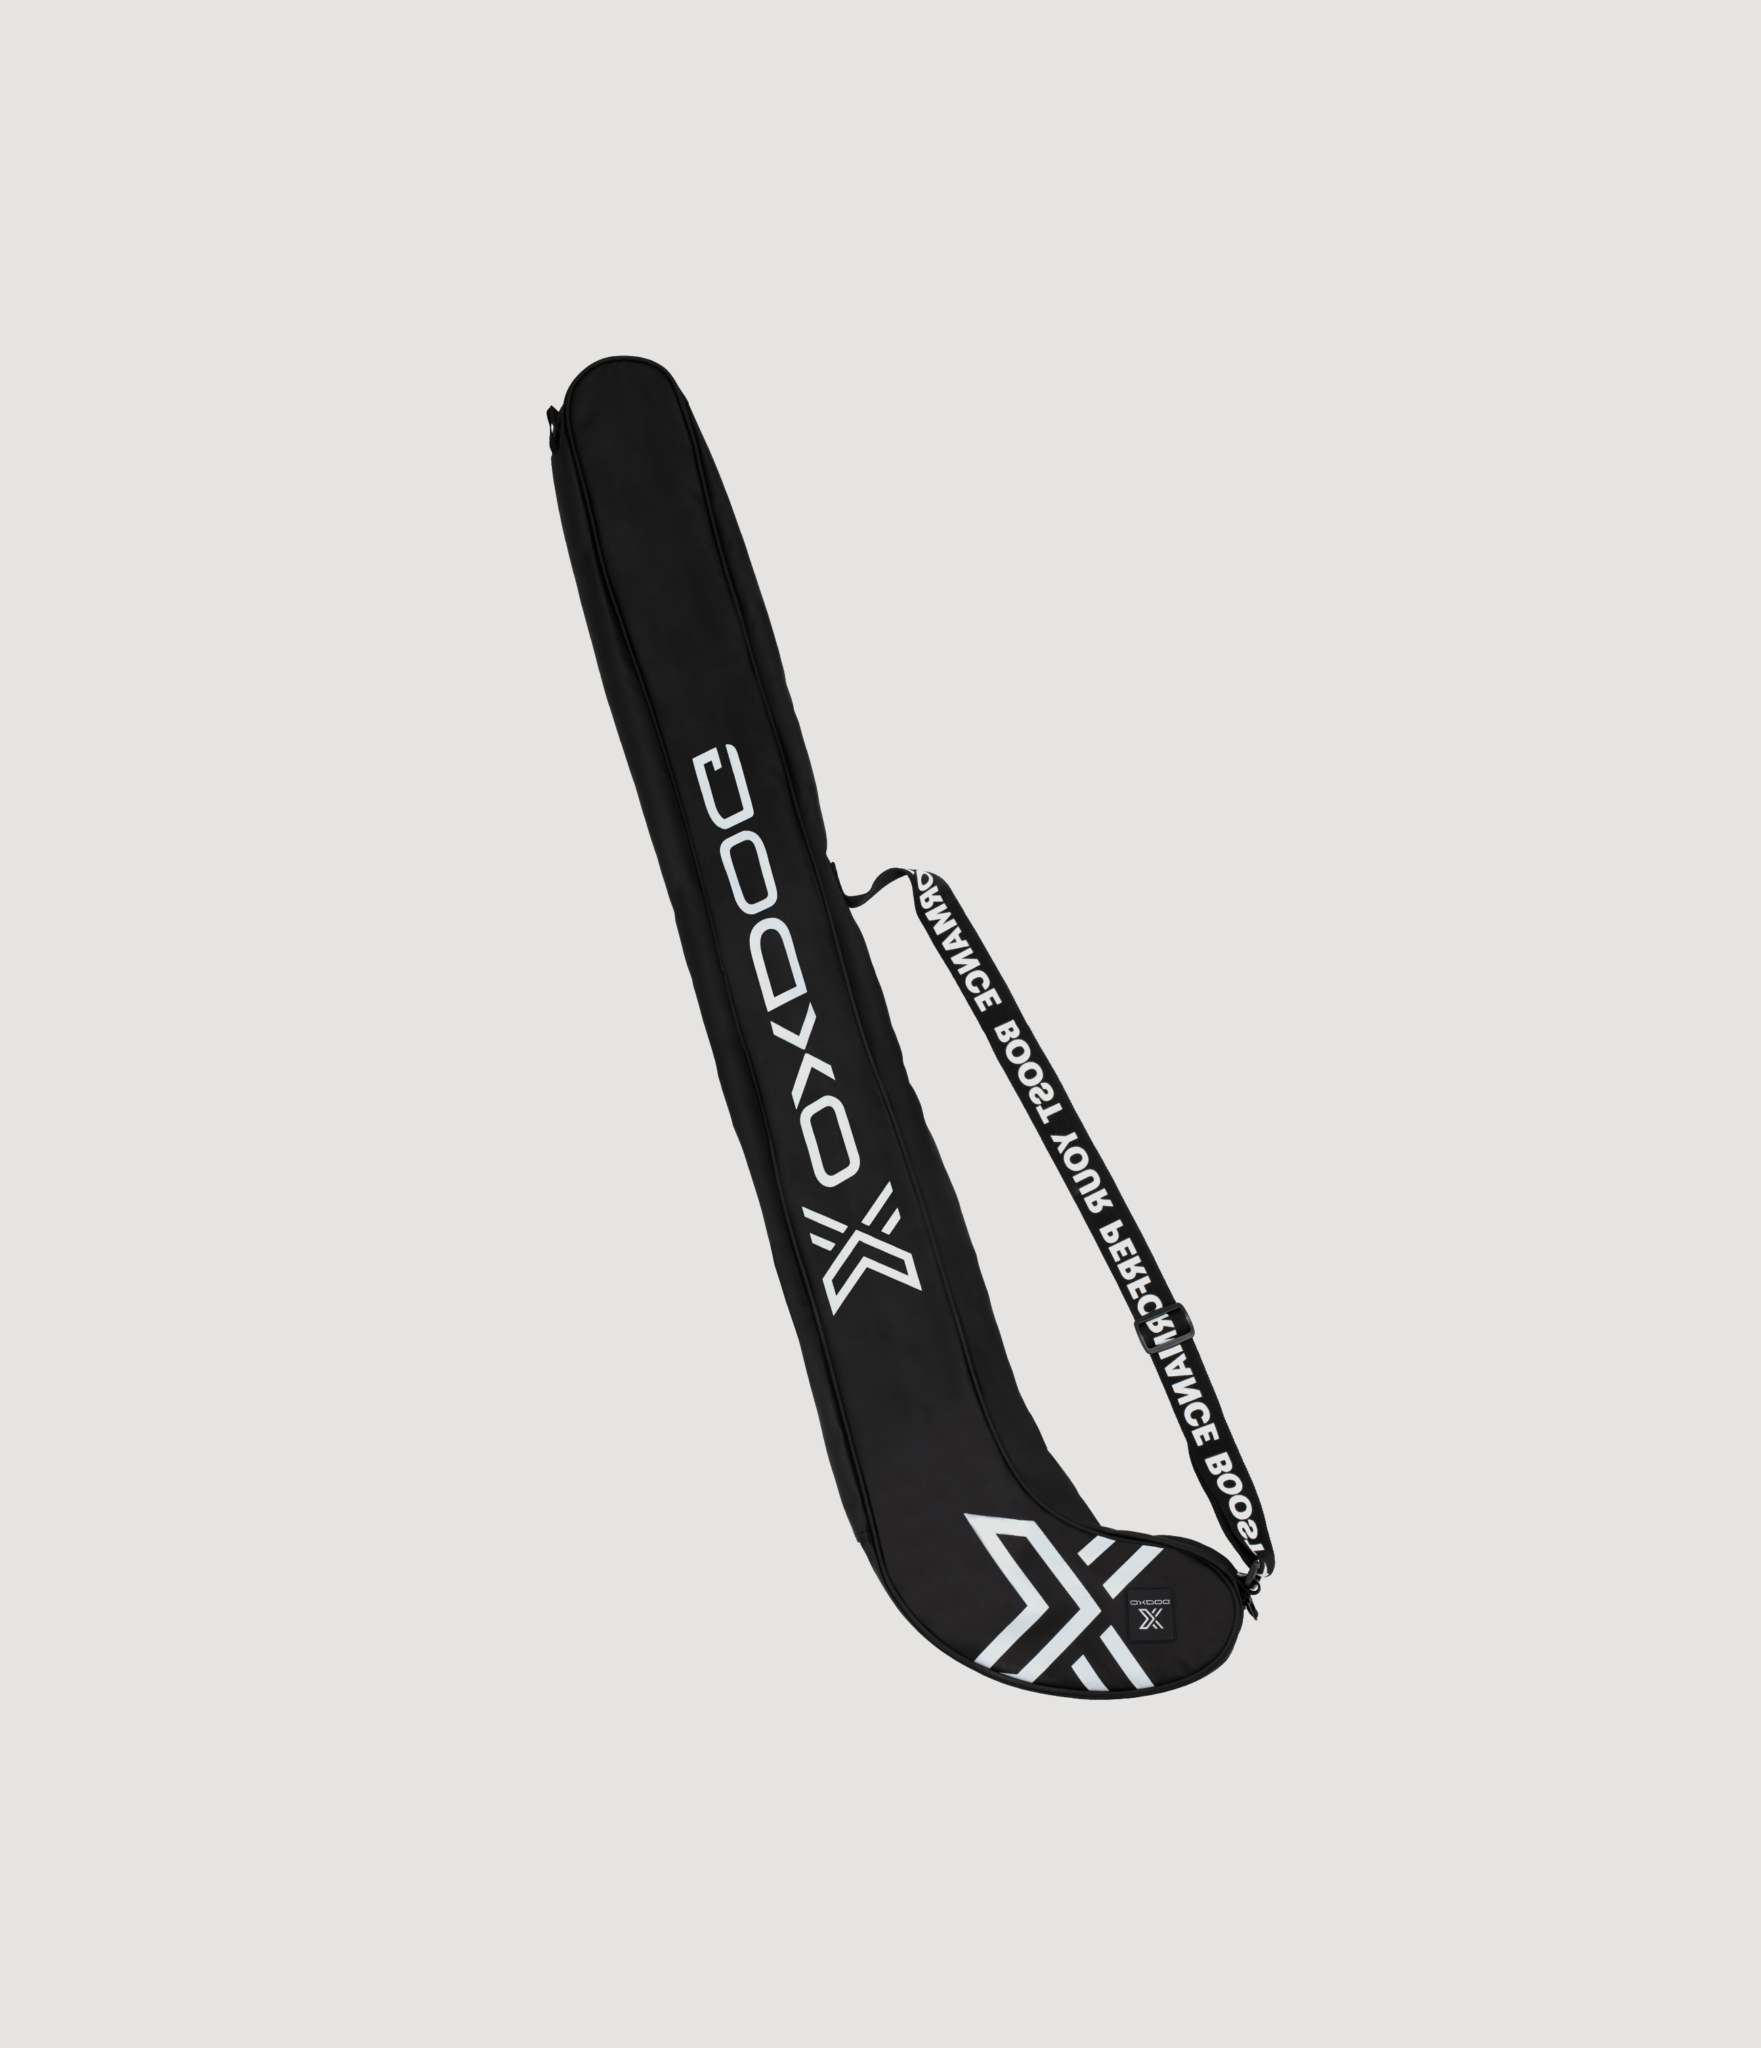 OX1 Oxdog stick bag Singapore